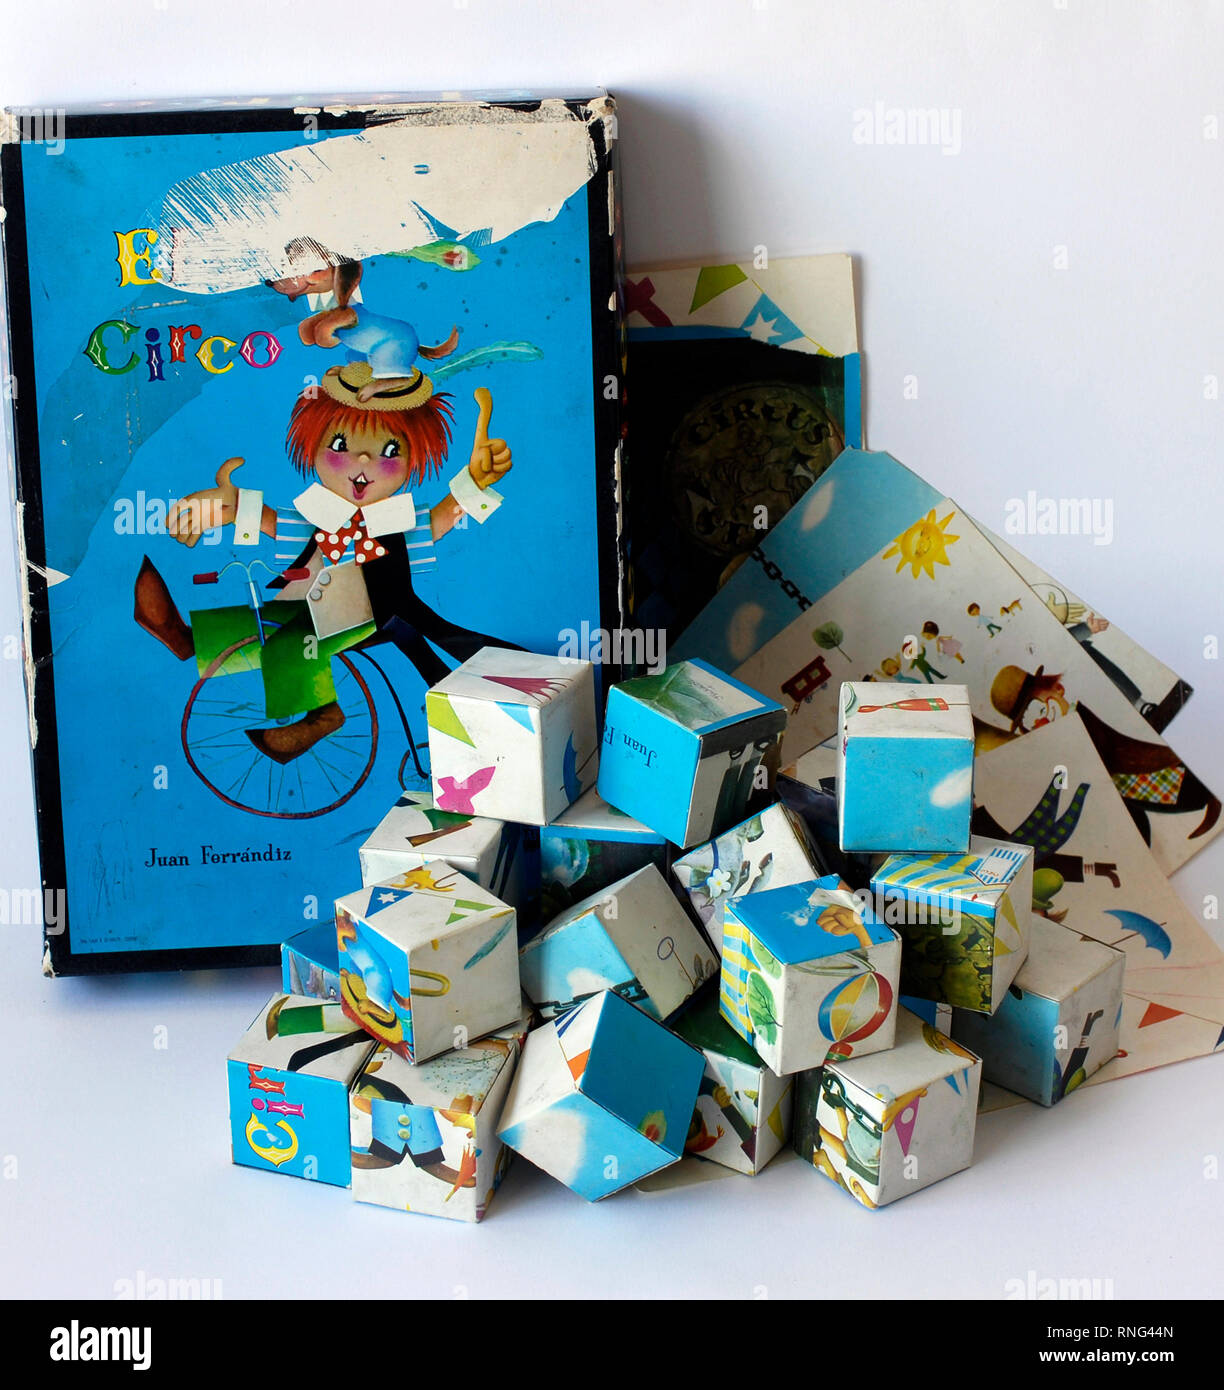 Vintage-Spiel, Karton Würfel puzzle, mit Zirkus-Motiven Stockfotografie -  Alamy